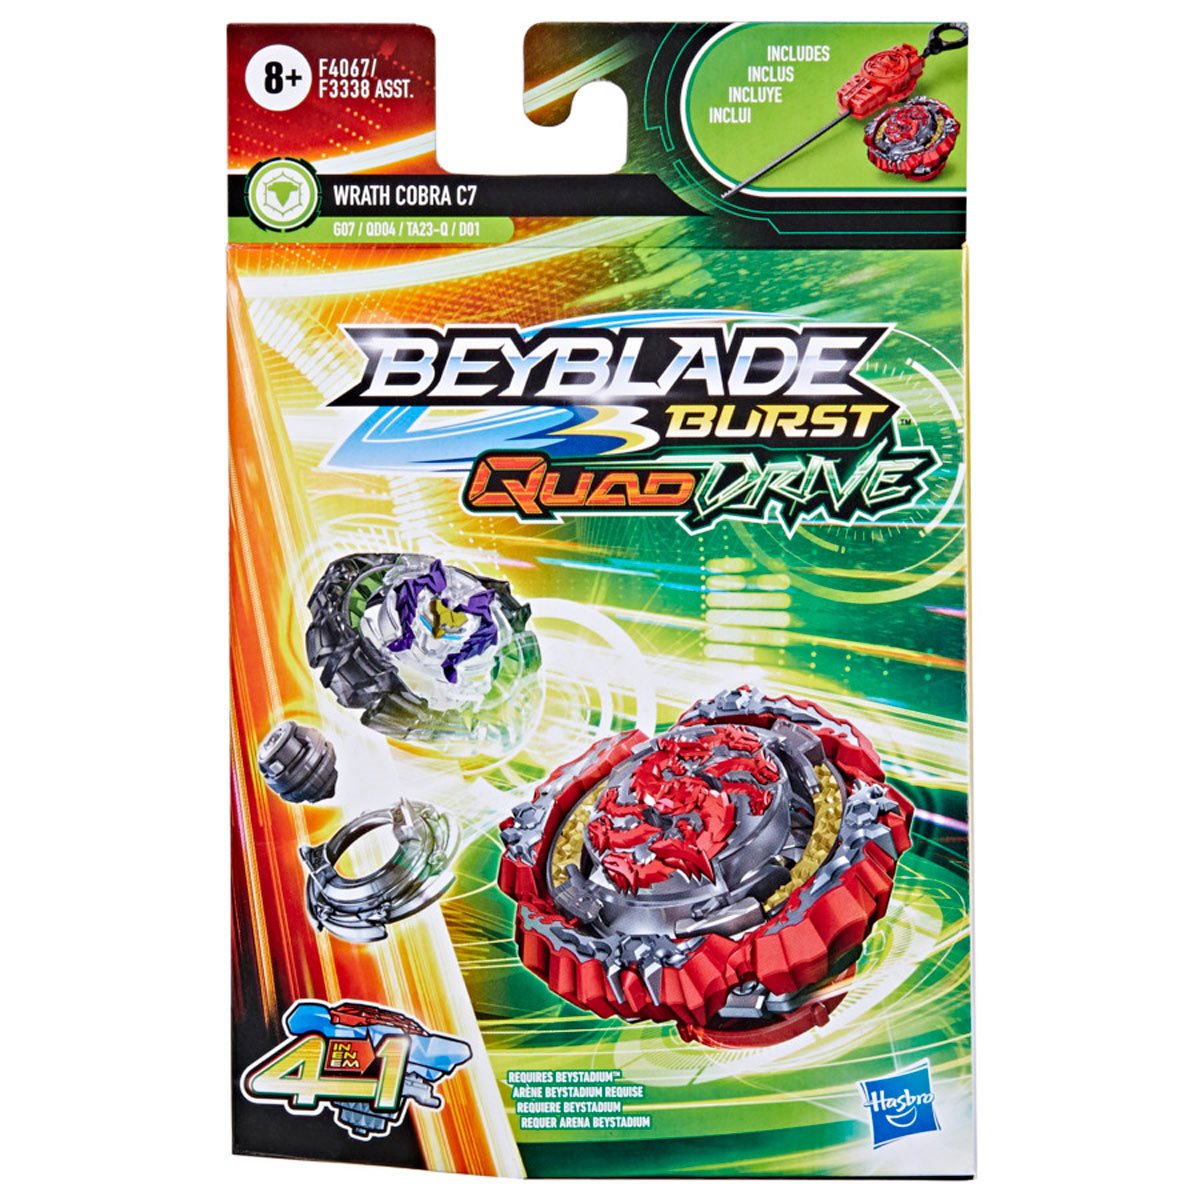 Beyblade - Pack Burst Quad Drive (varios modelos)